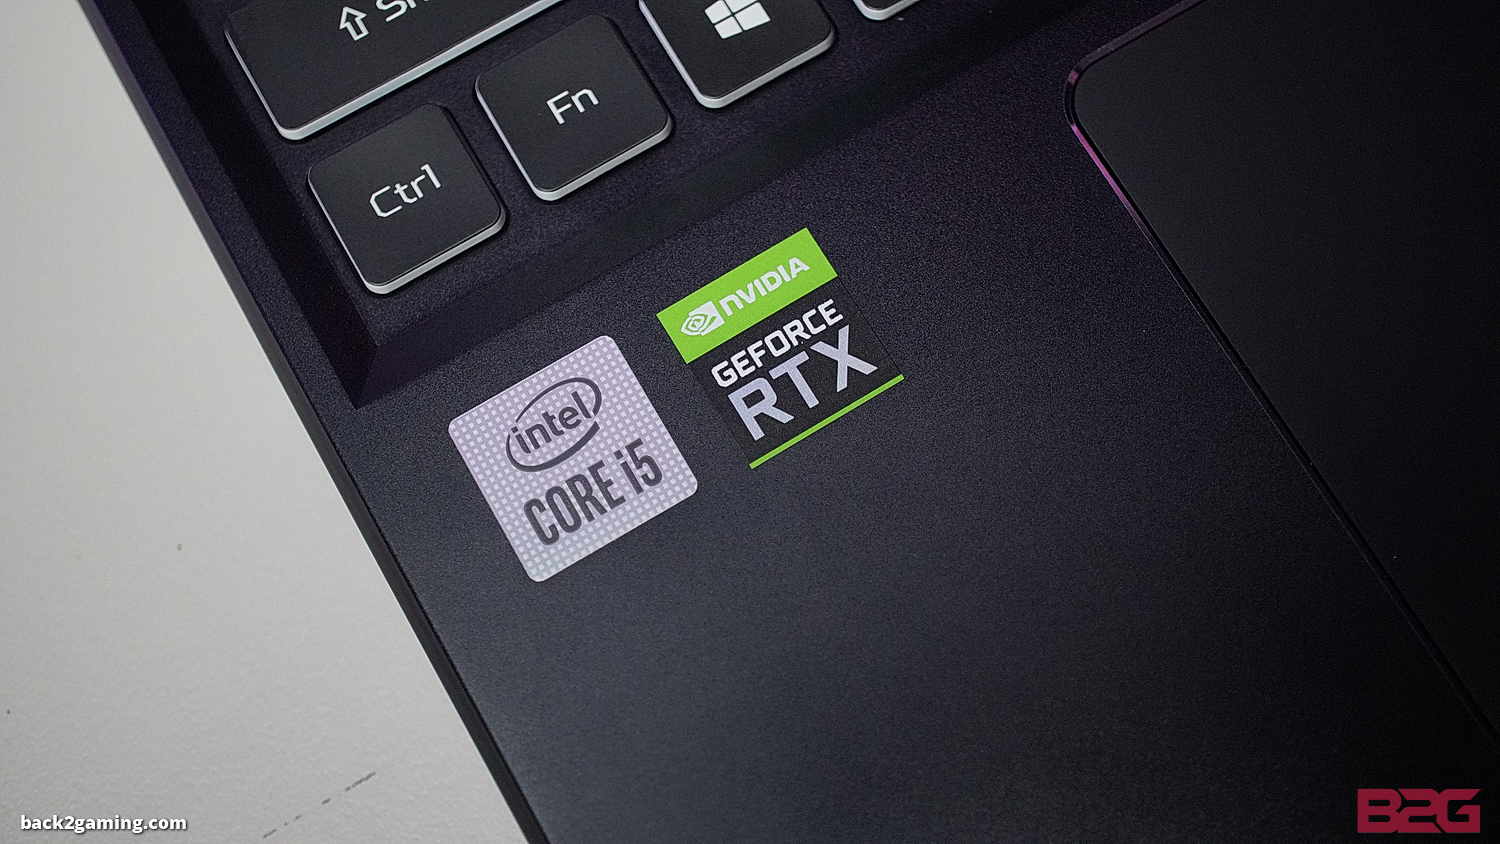 10th Gen Intel Core i5-10300H + RTX 3060 feat. Predator Helios 300 Gaming Laptop Review - returnal